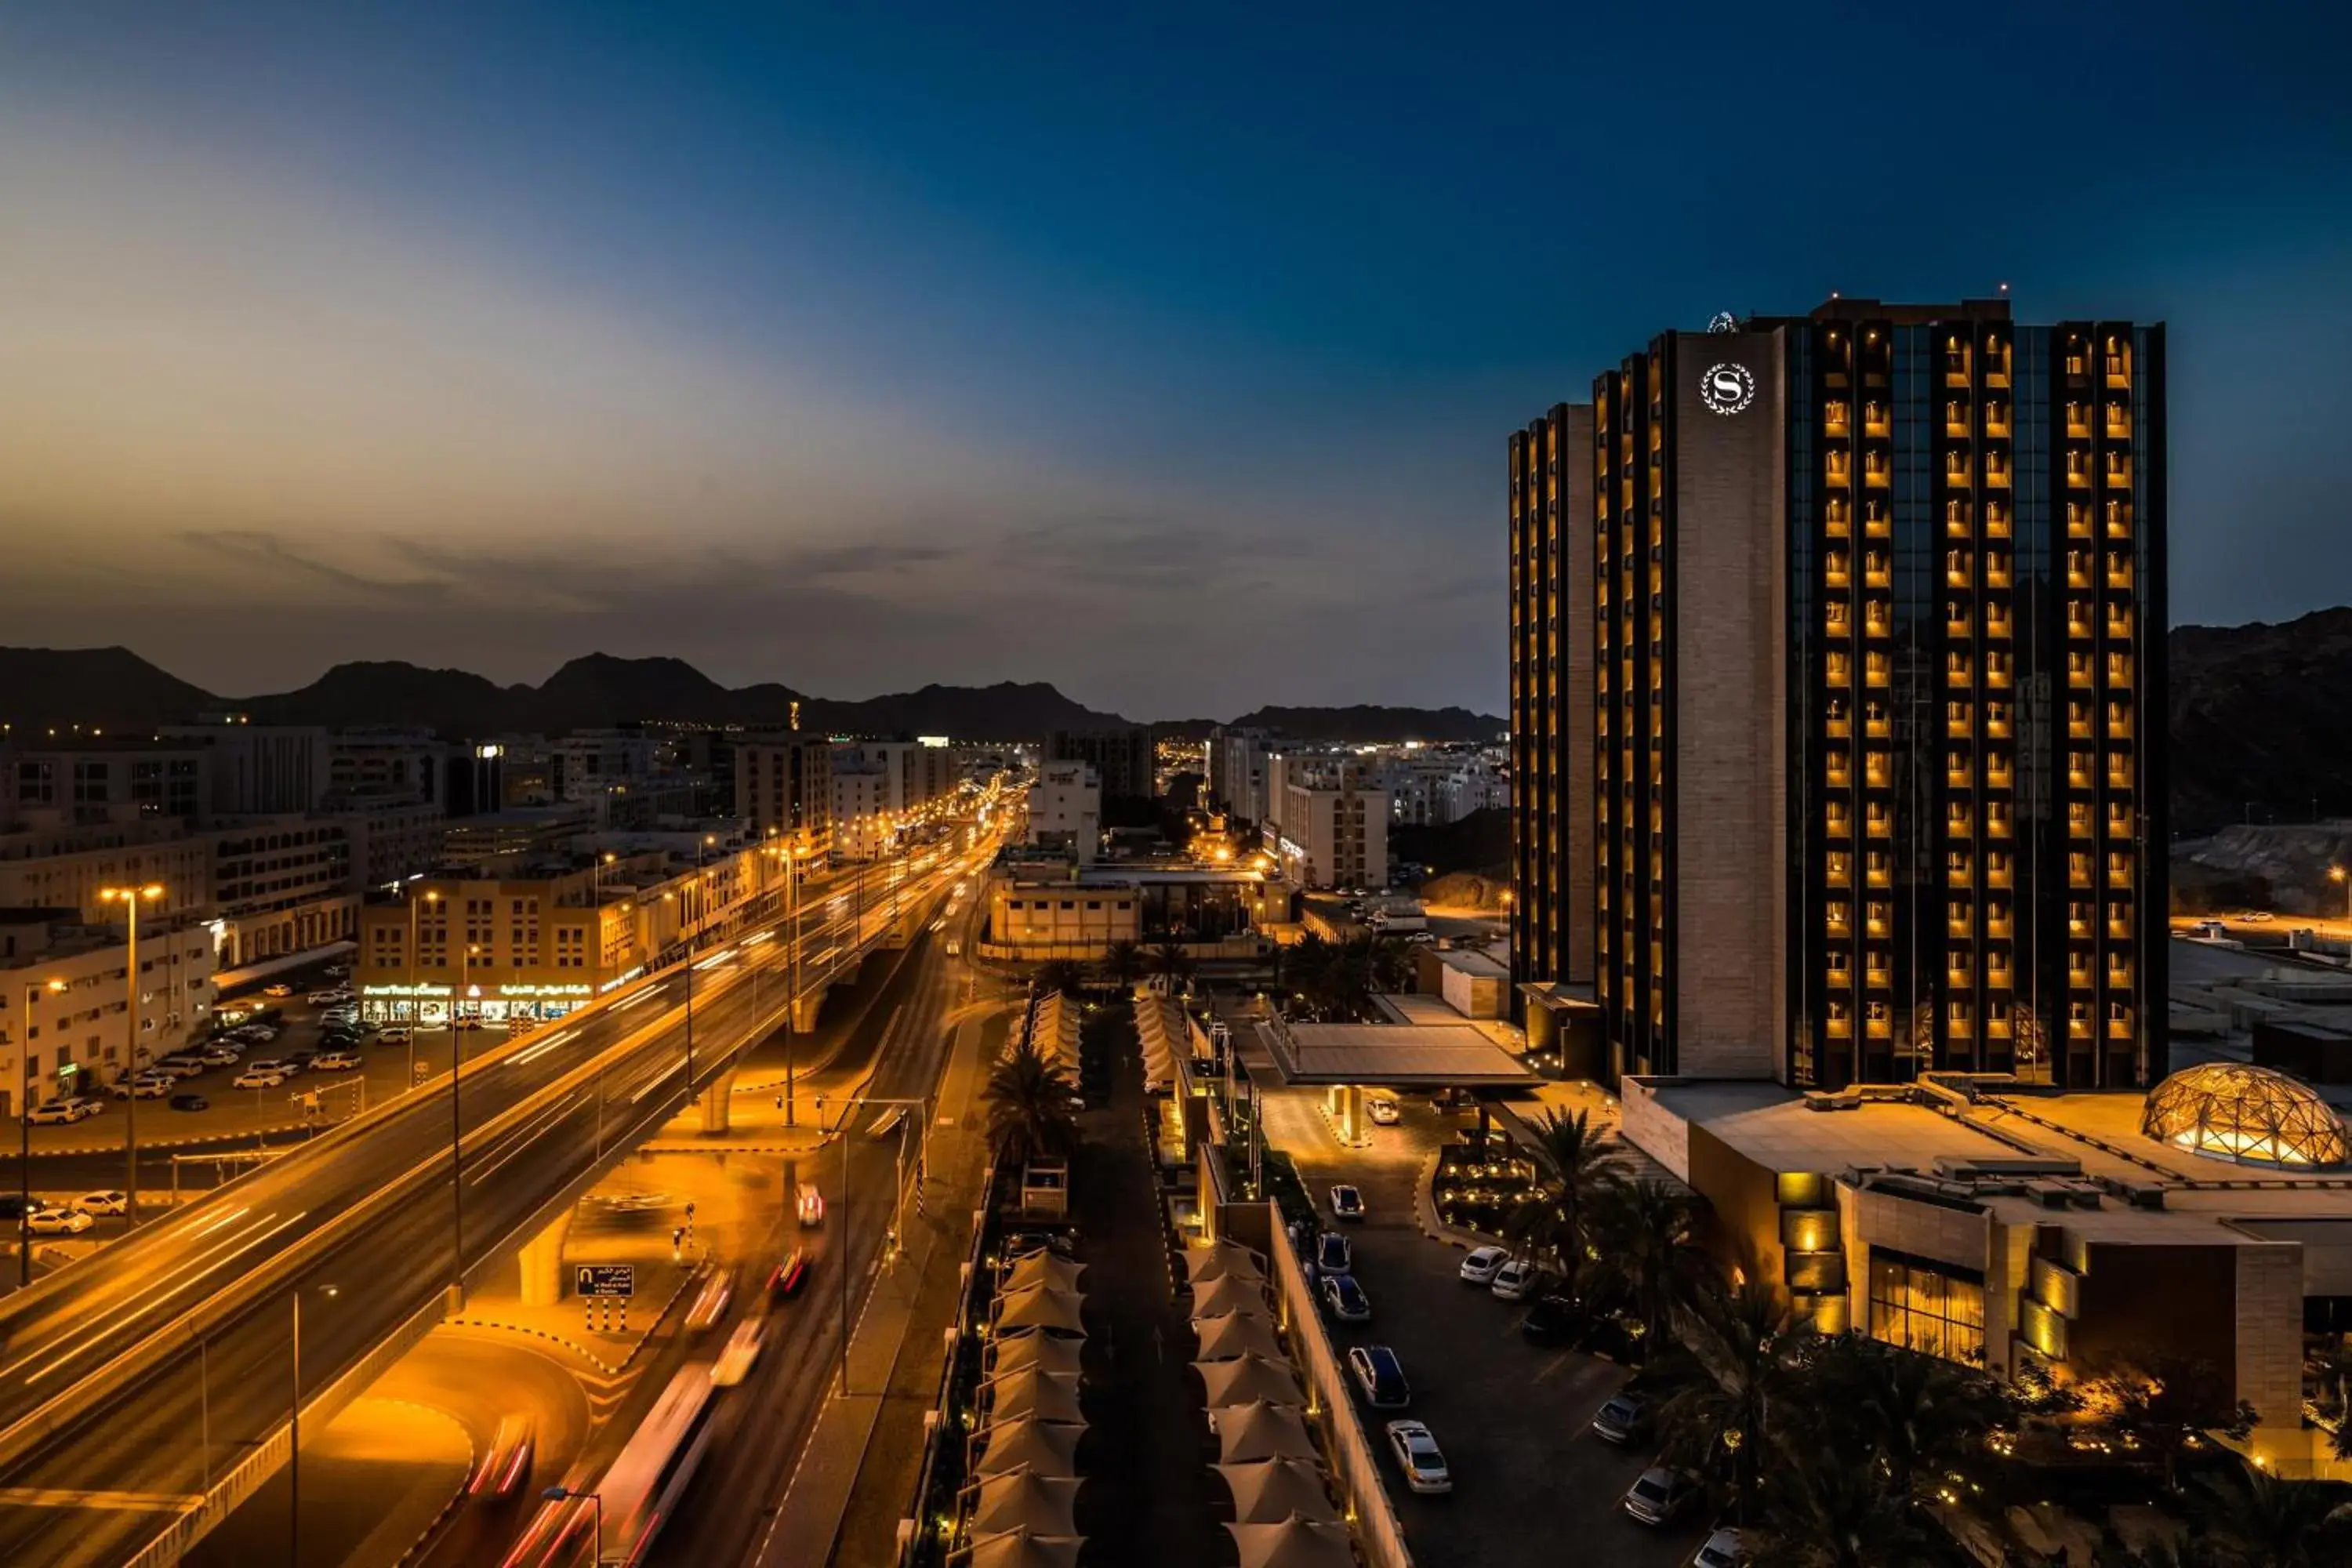 Property building in Sheraton Oman Hotel